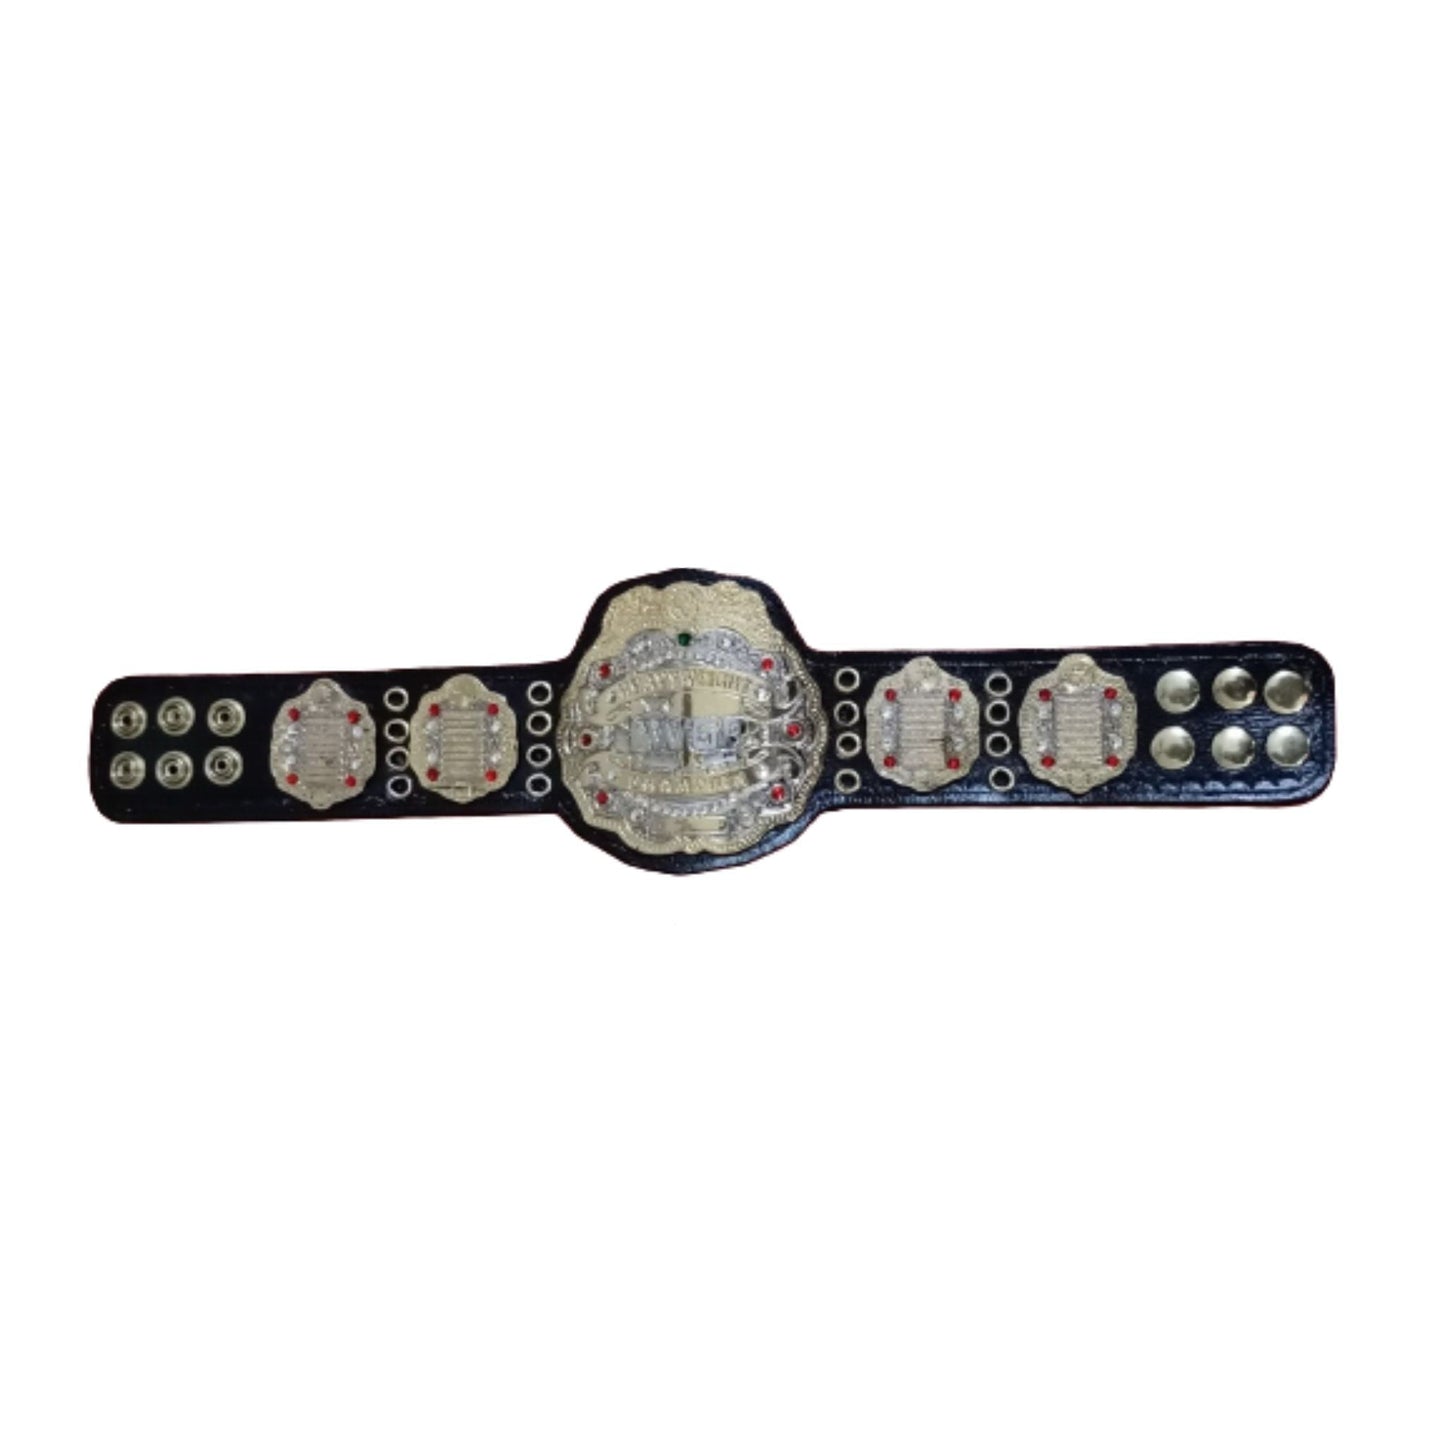 IWGP V4 mini wrestling championship replica belt